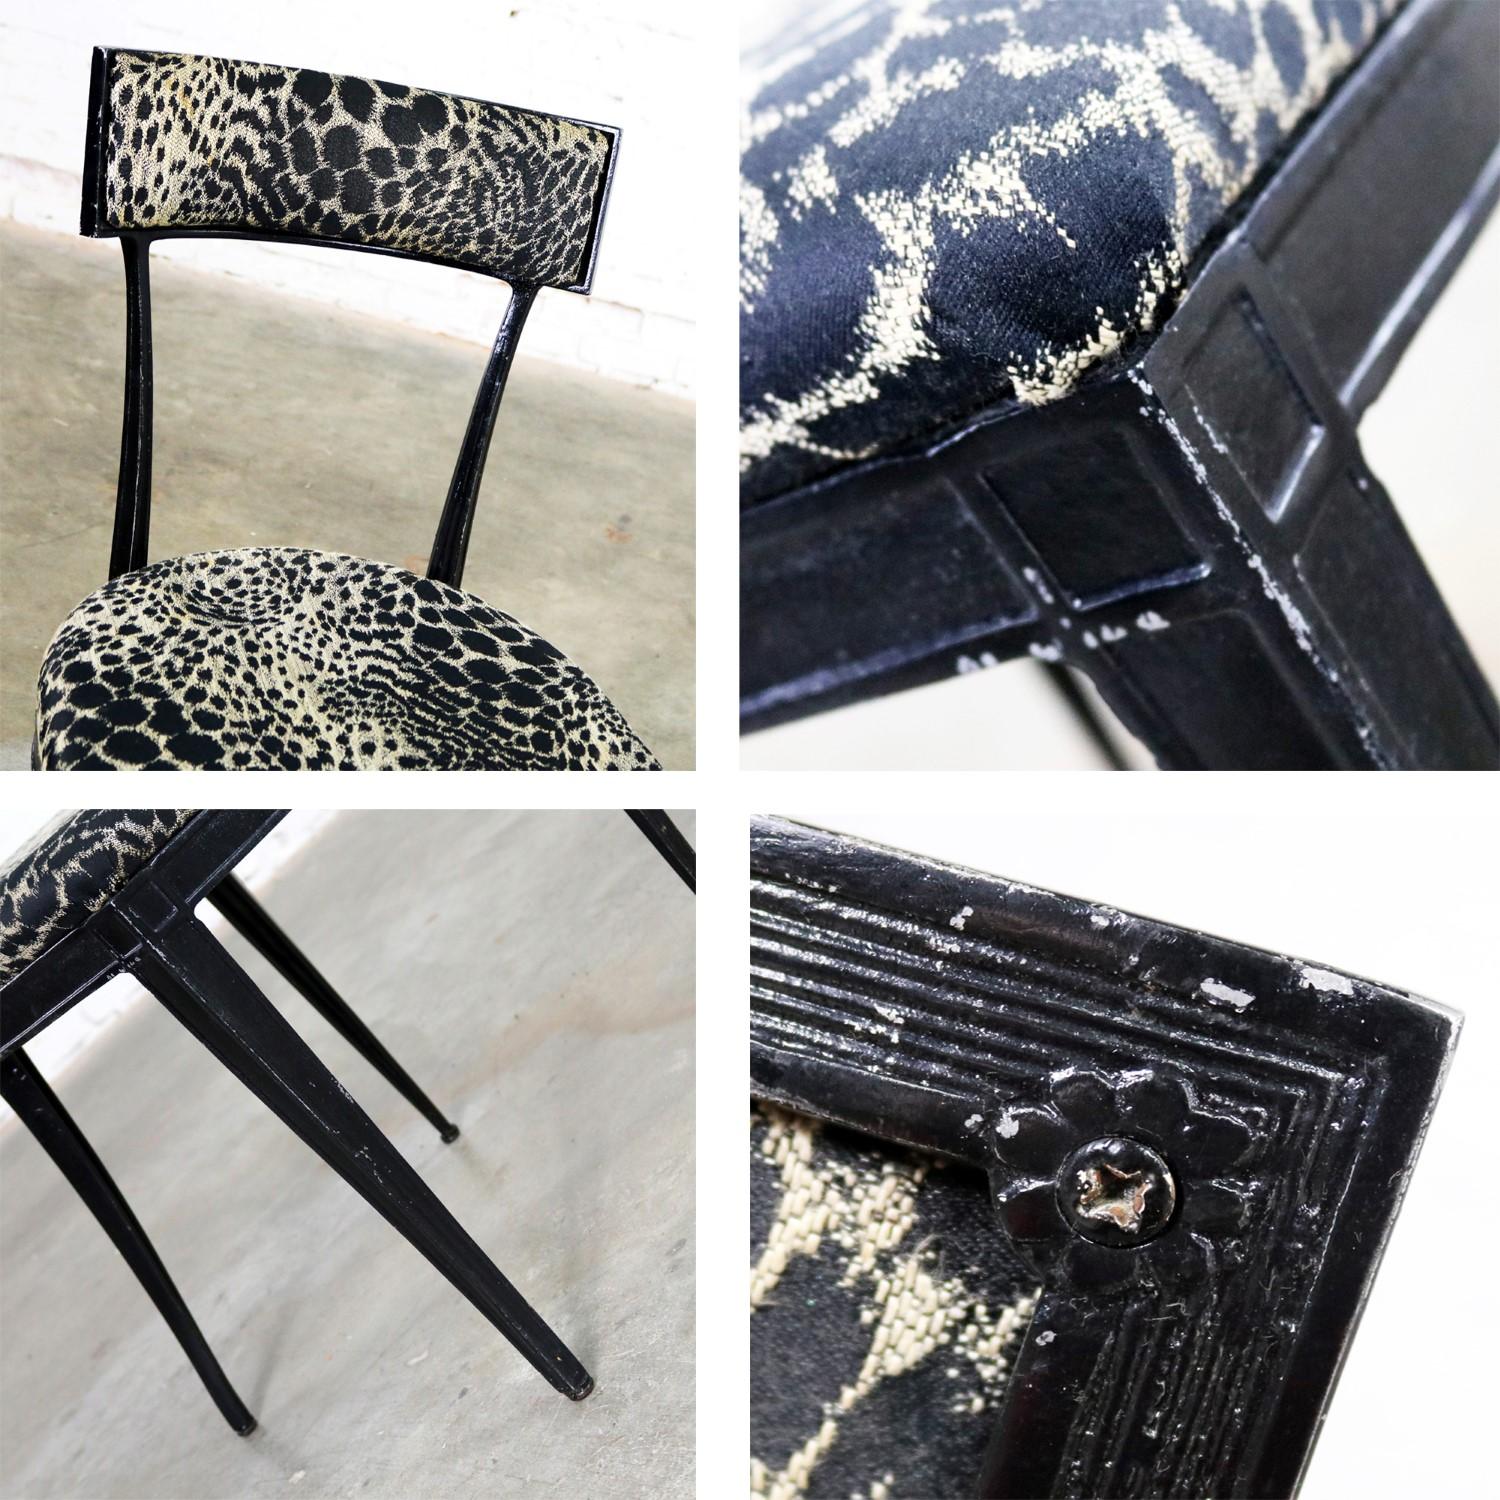 Black Art Deco & Animal Print Side Chairs Cast Aluminium Crucible Products, Pair 1